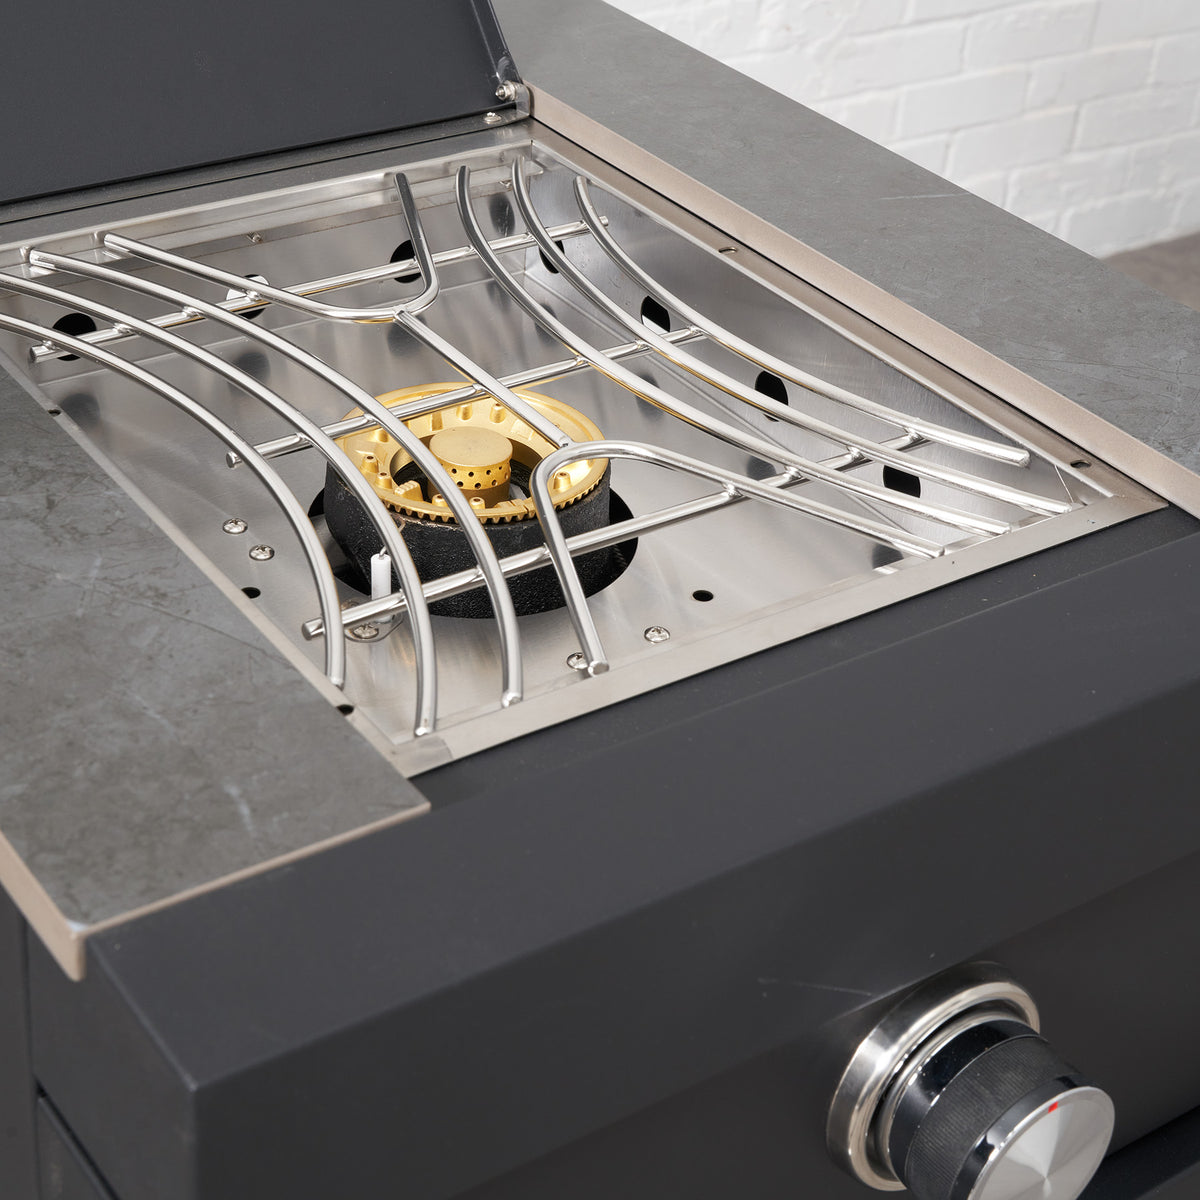 Draco Grills Fusion 6 Burner Black Outdoor Kitchen with Modular Side Burner, Single Fridge, Sink, 90 Degree Corner